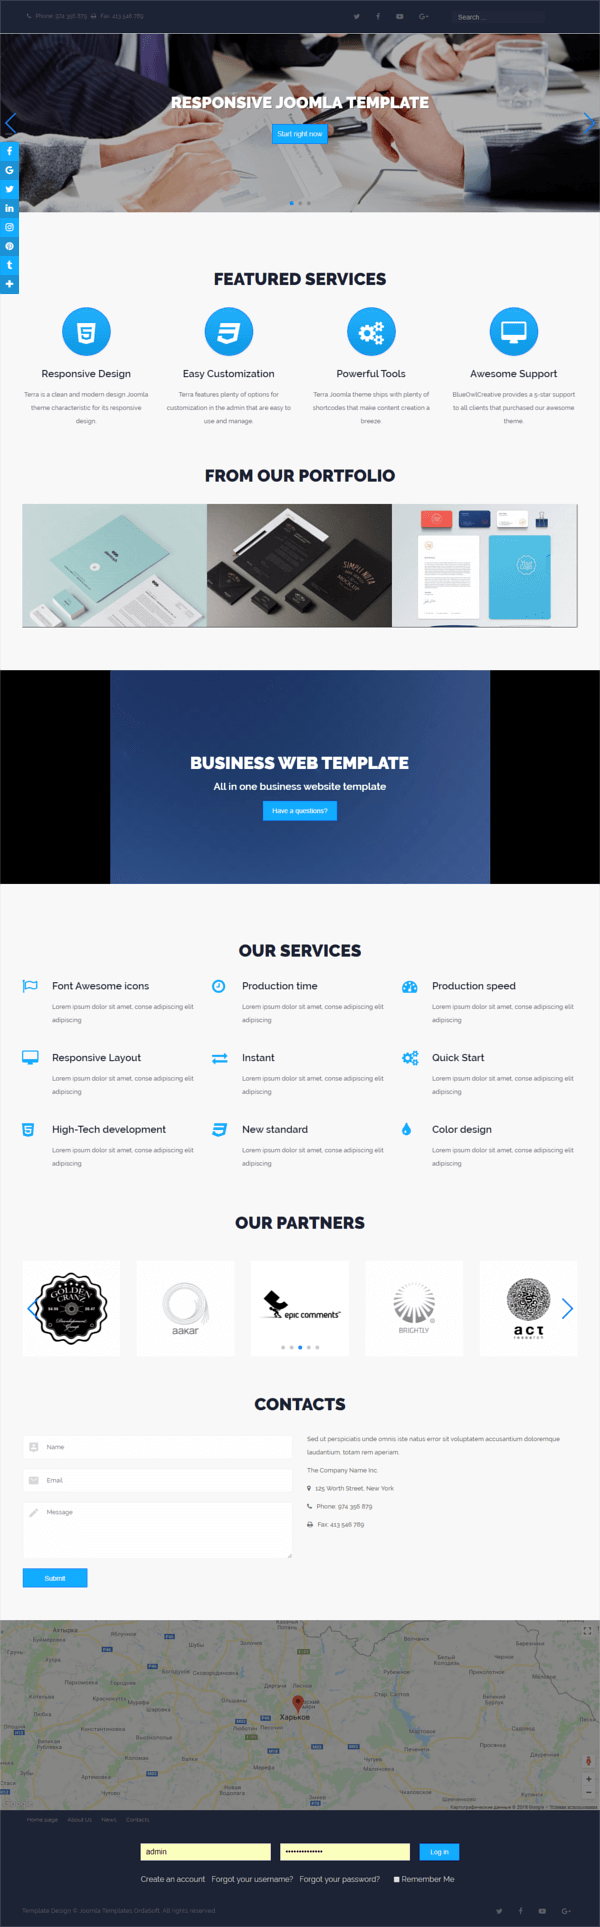 Rapture, Joomla business template for create business website, full screen 